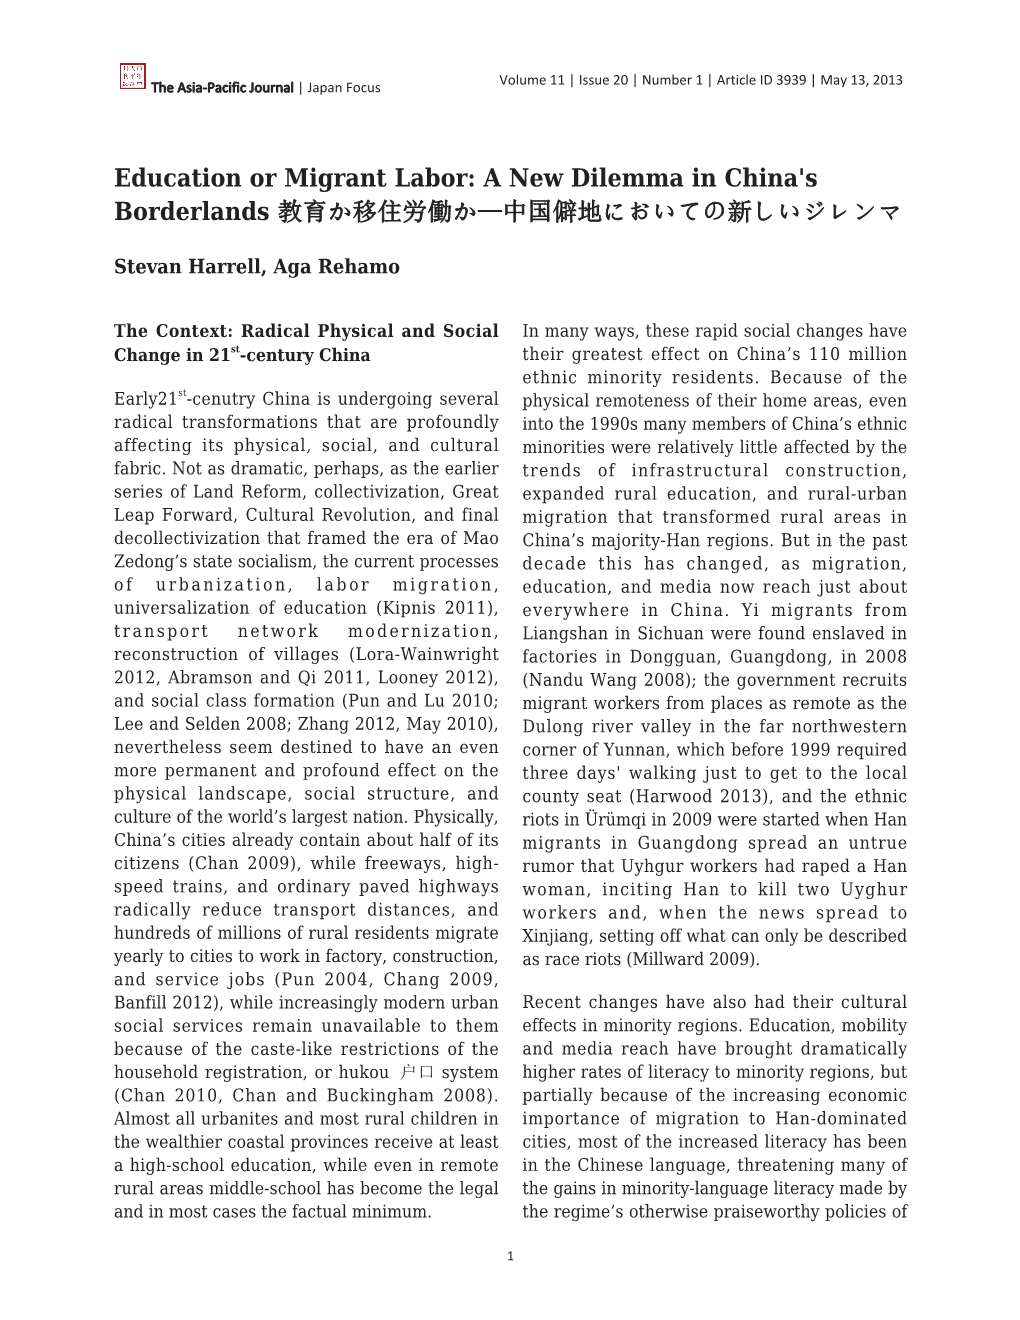 Education Or Migrant Labor: a New Dilemma in China's Borderlands 教育か移住労働か—中国僻地においての新しいジレンマ